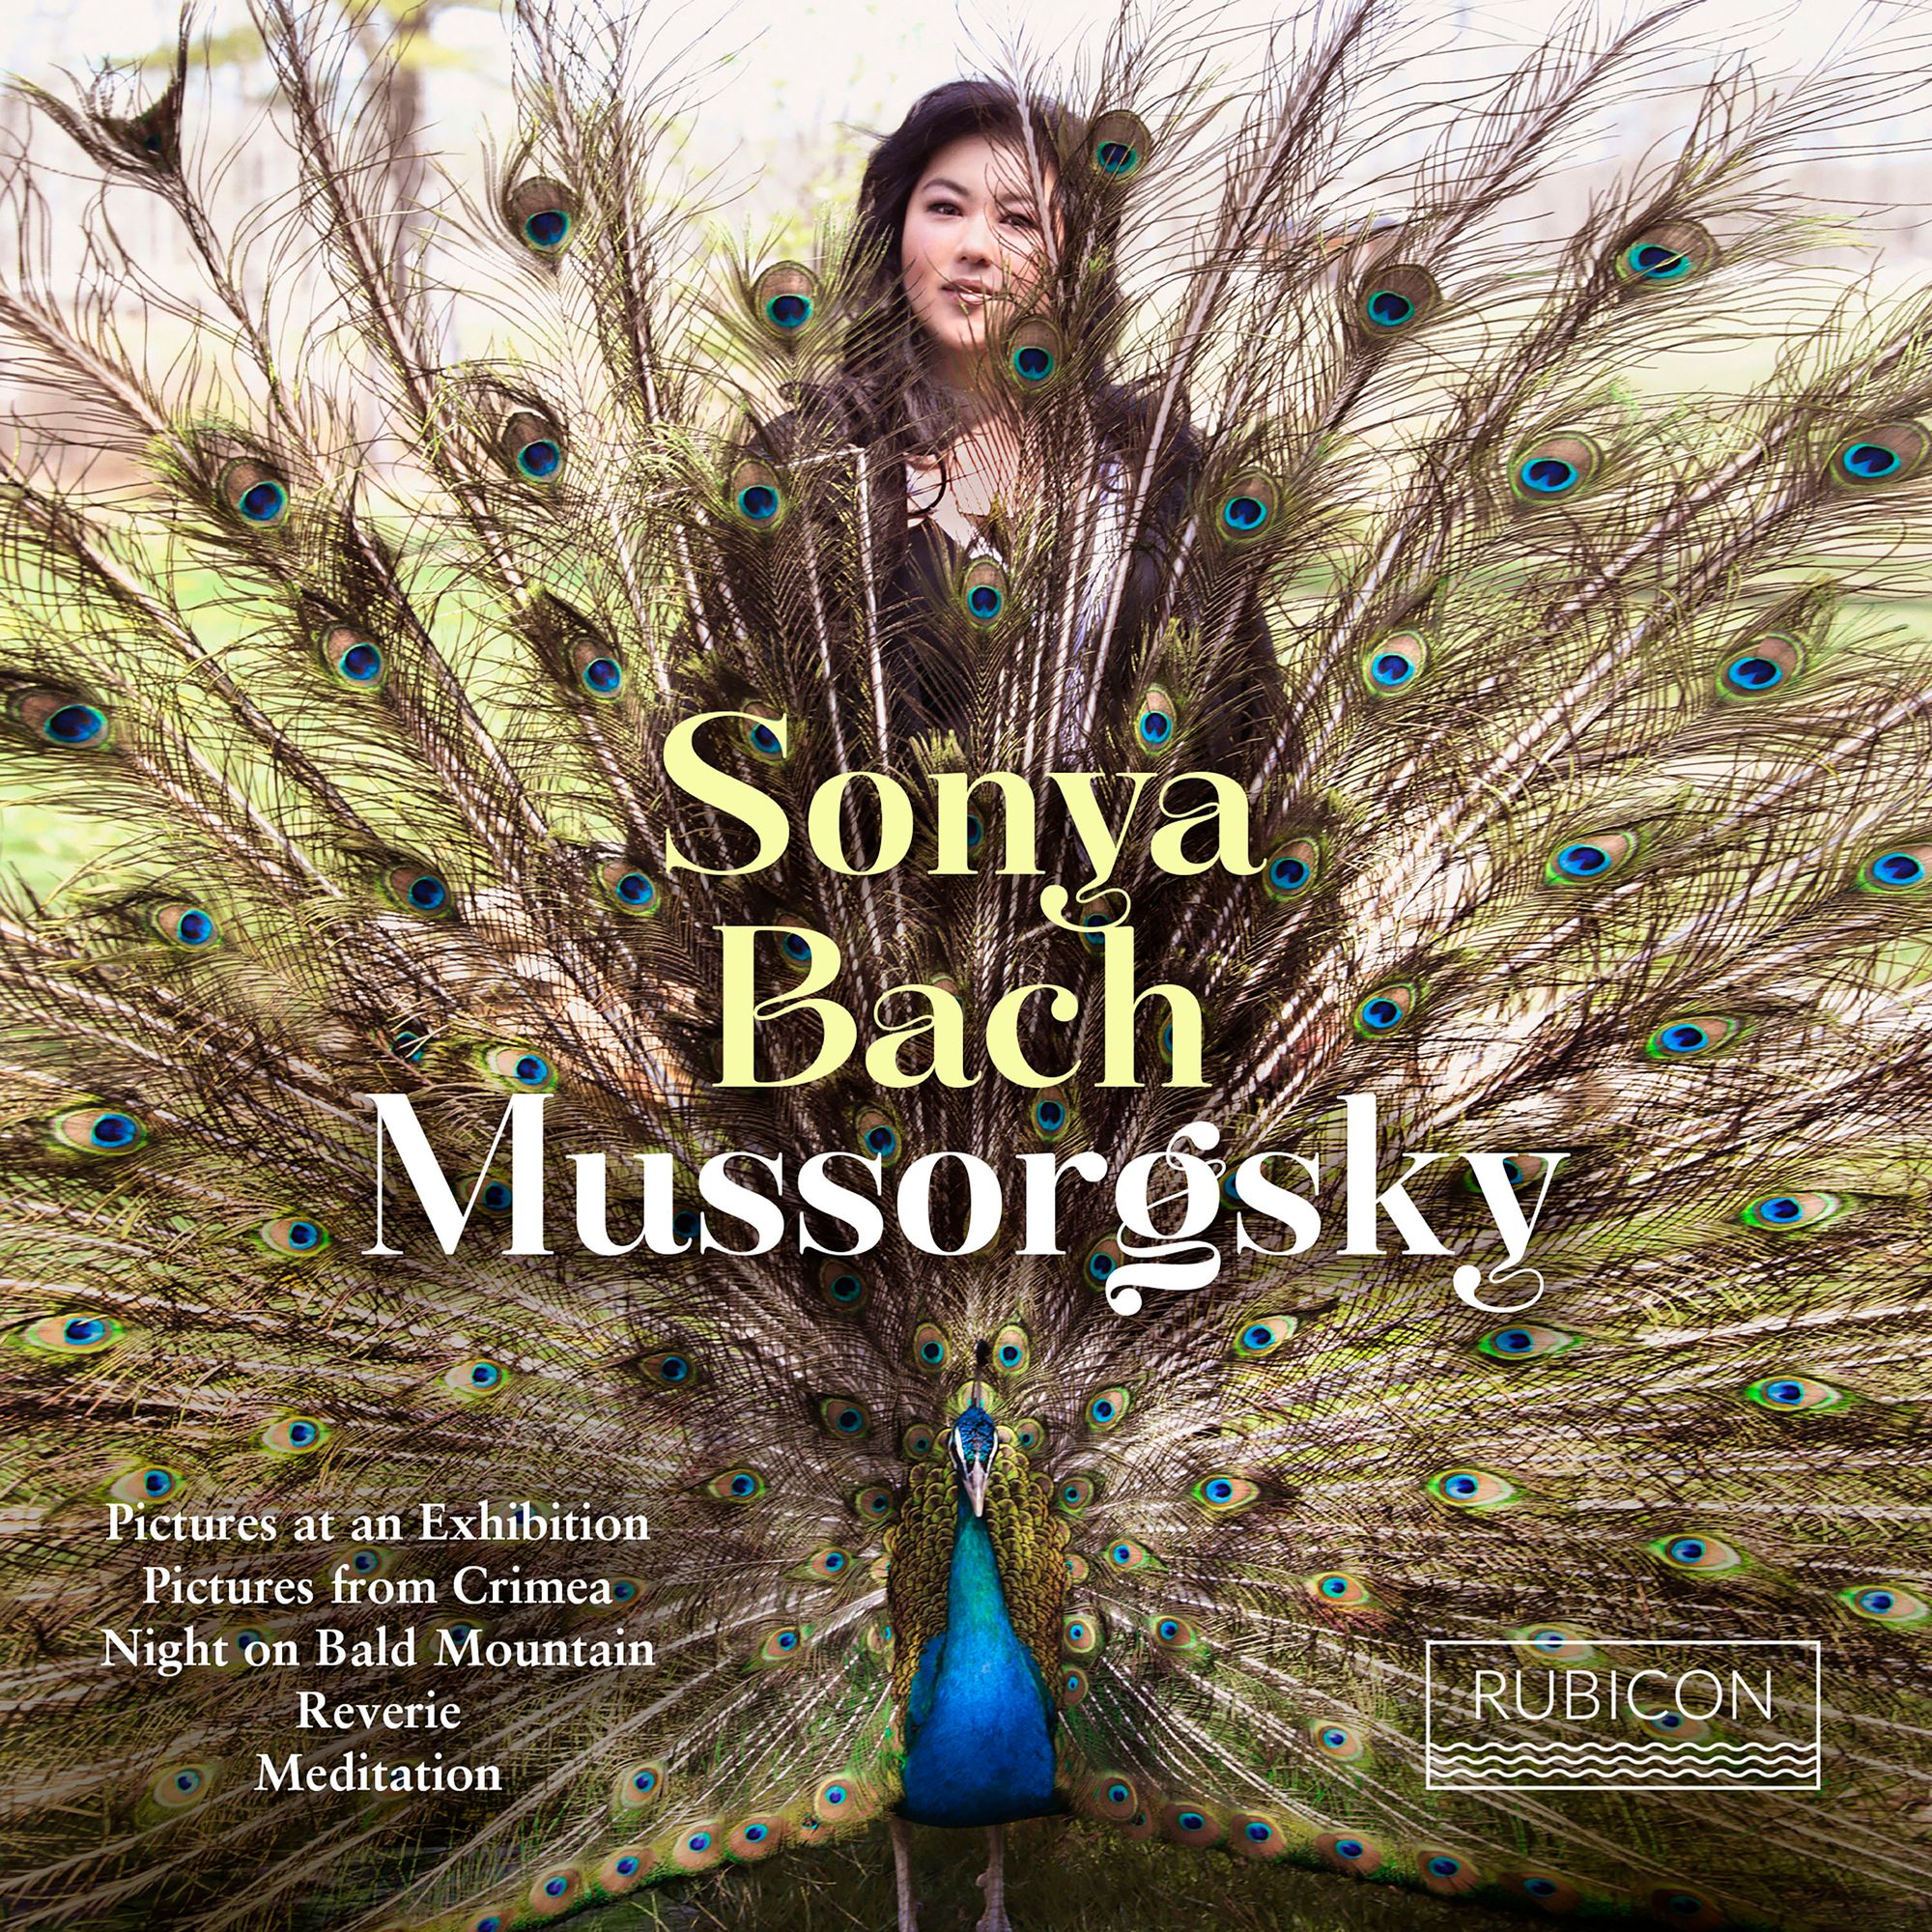 Sonya Bach plays Mussorgsky